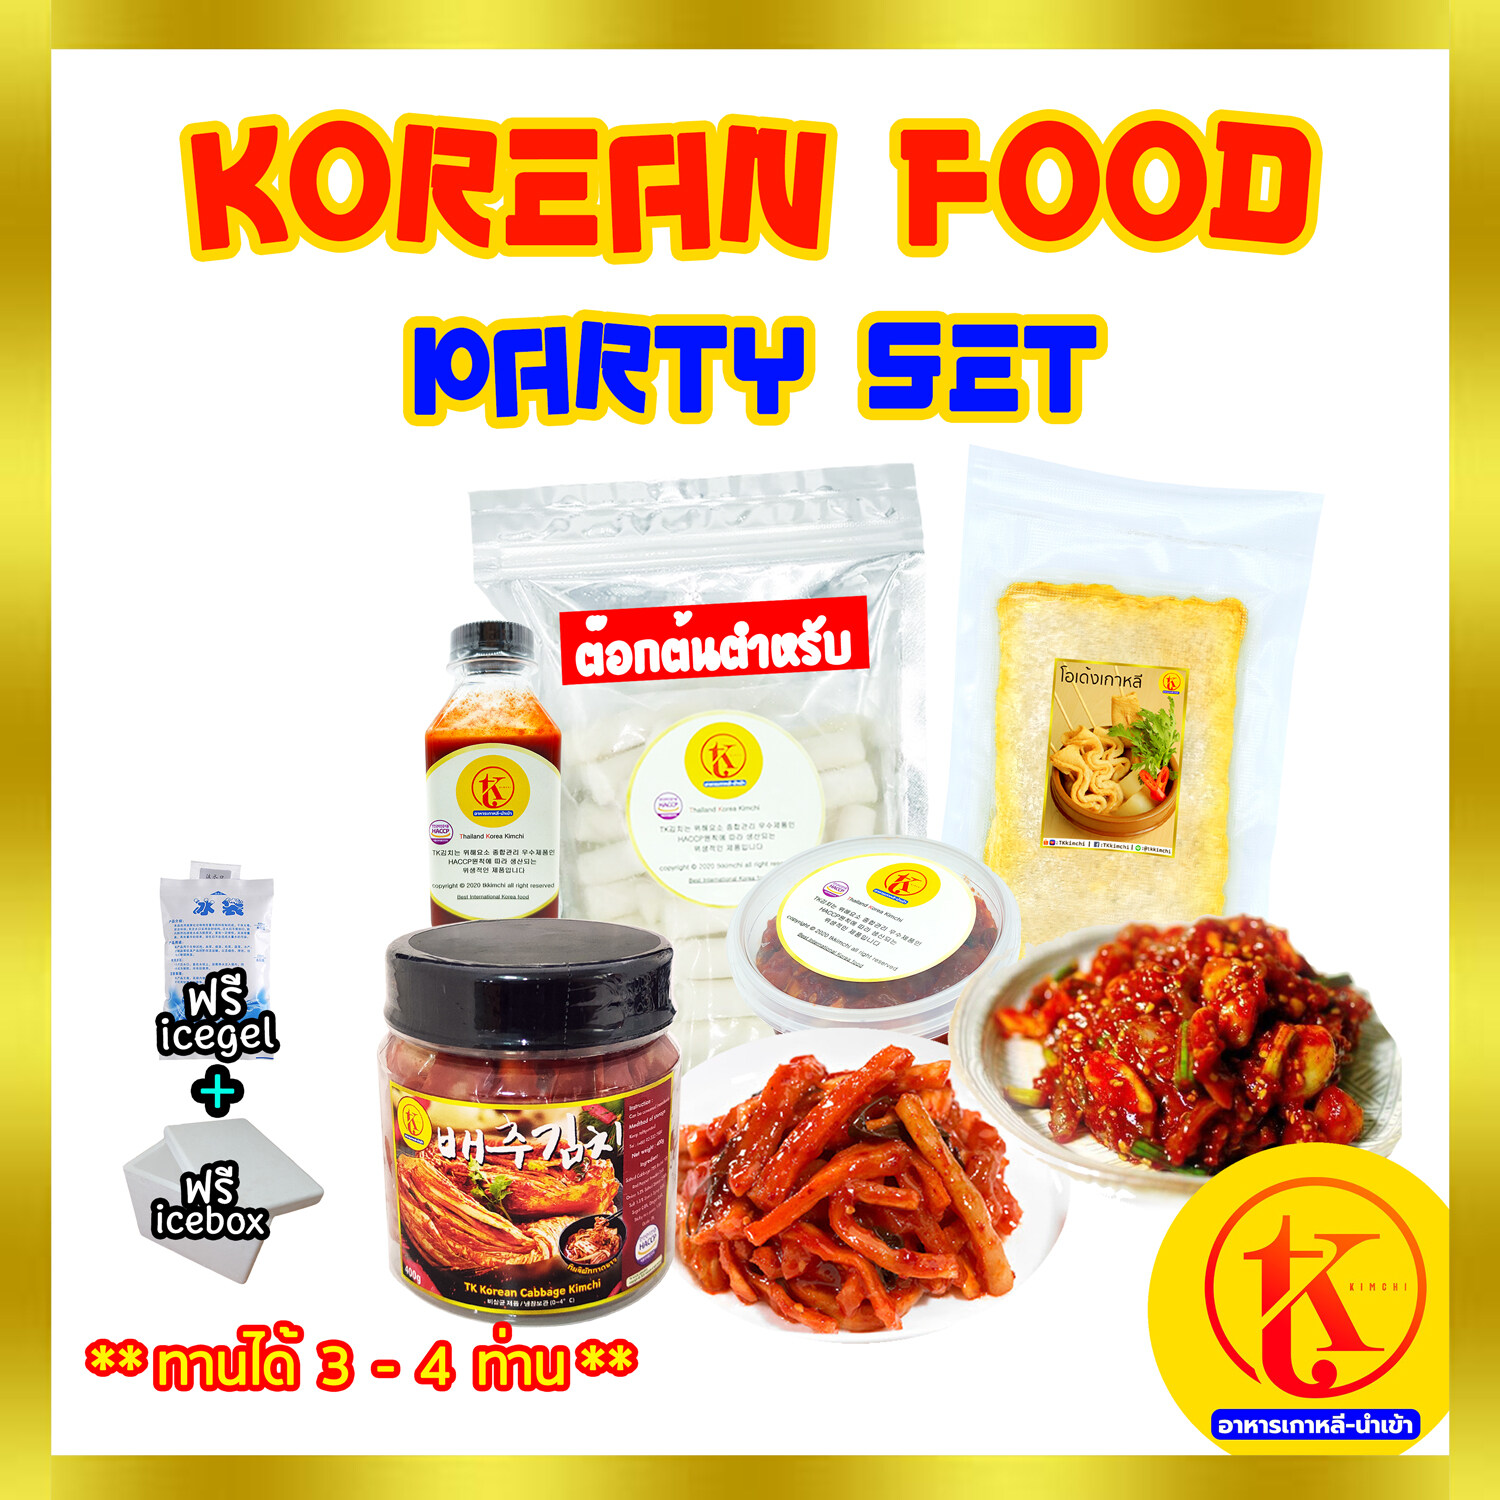 Korean Food Party set ชุดสุดคุ้ม อร่อยยกแก๊งค์  ? ต๊อกต้นตำหรับ ? ? ชุดเล็ก สำหรับ 3 - 4 ท่าน ? by TKkimchi